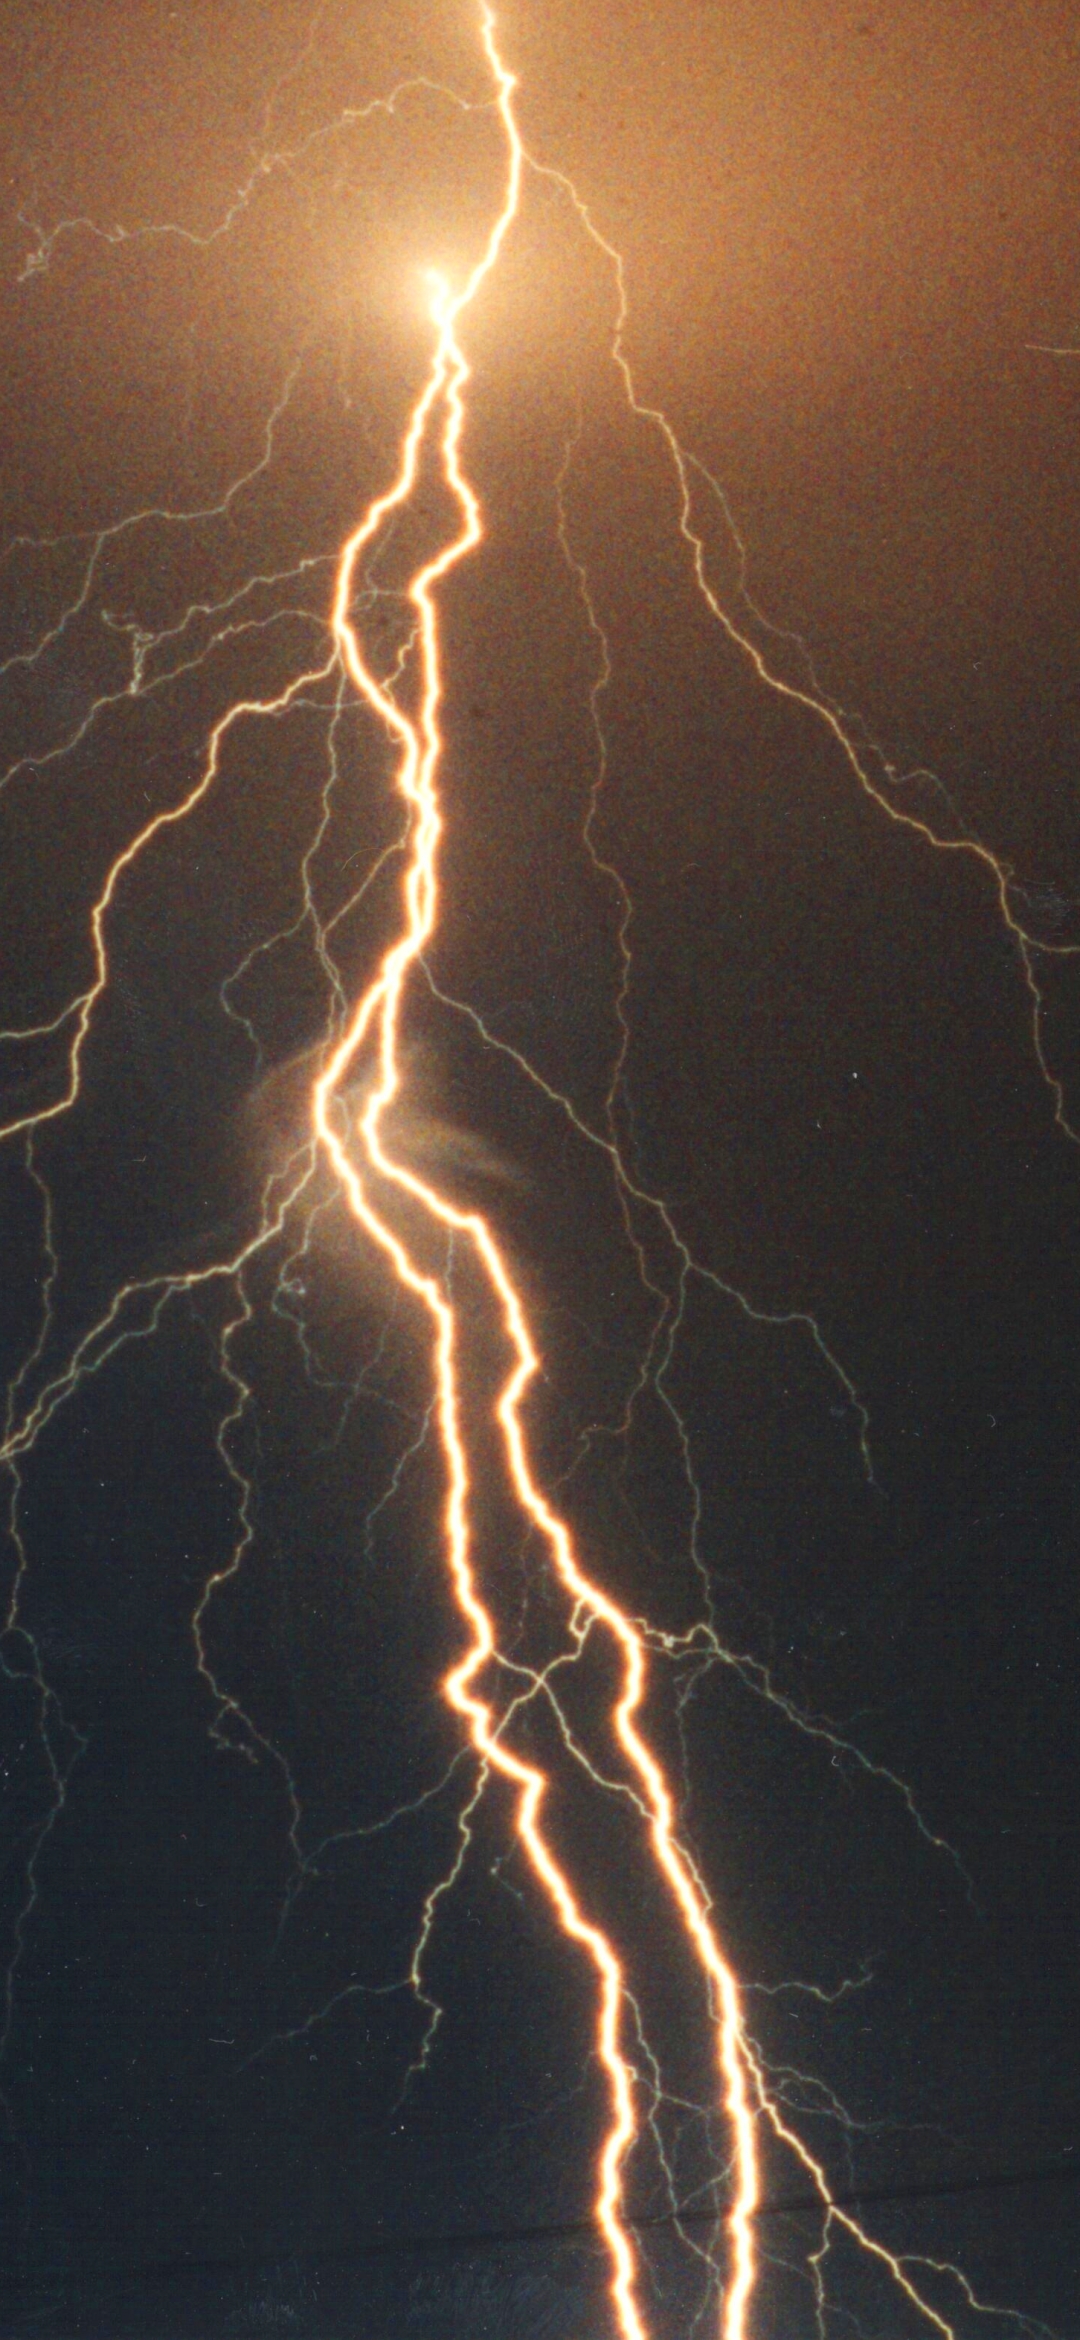 A lightning bolt is seen in the sky - Lightning